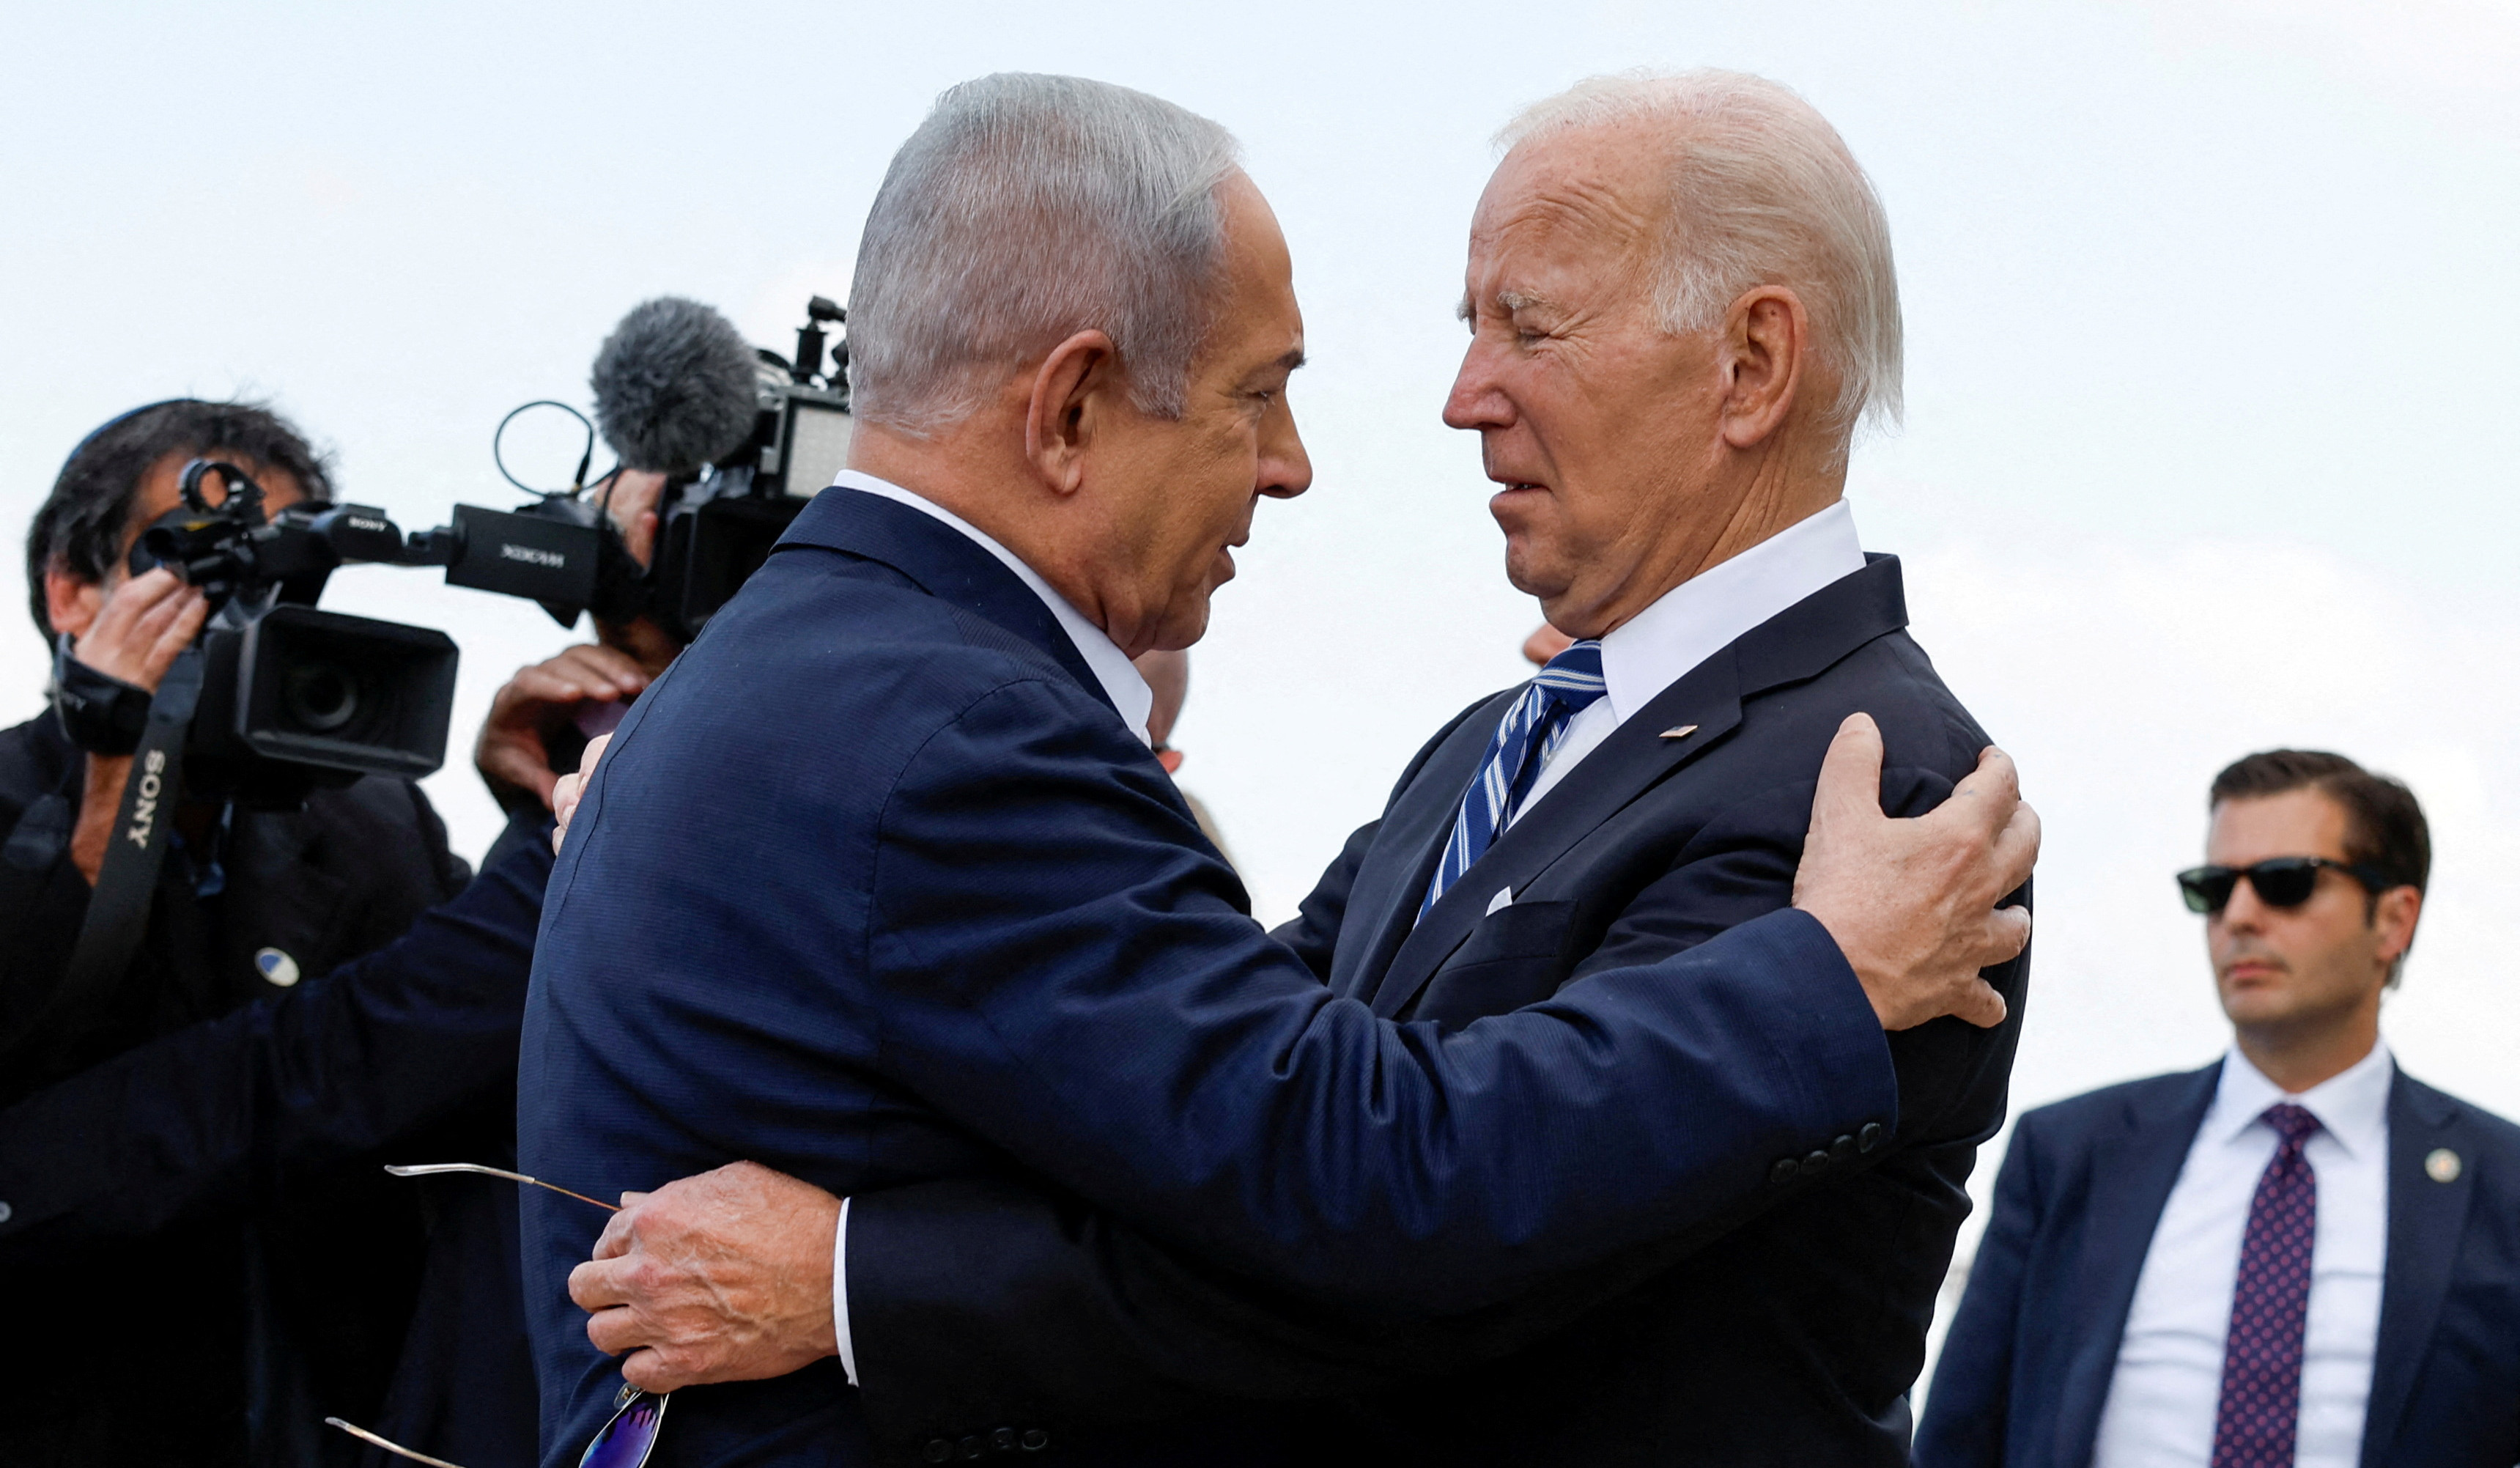 U.S. president Joe Biden lands in Israel, hugs Netanyahu and Herzog on tarmac